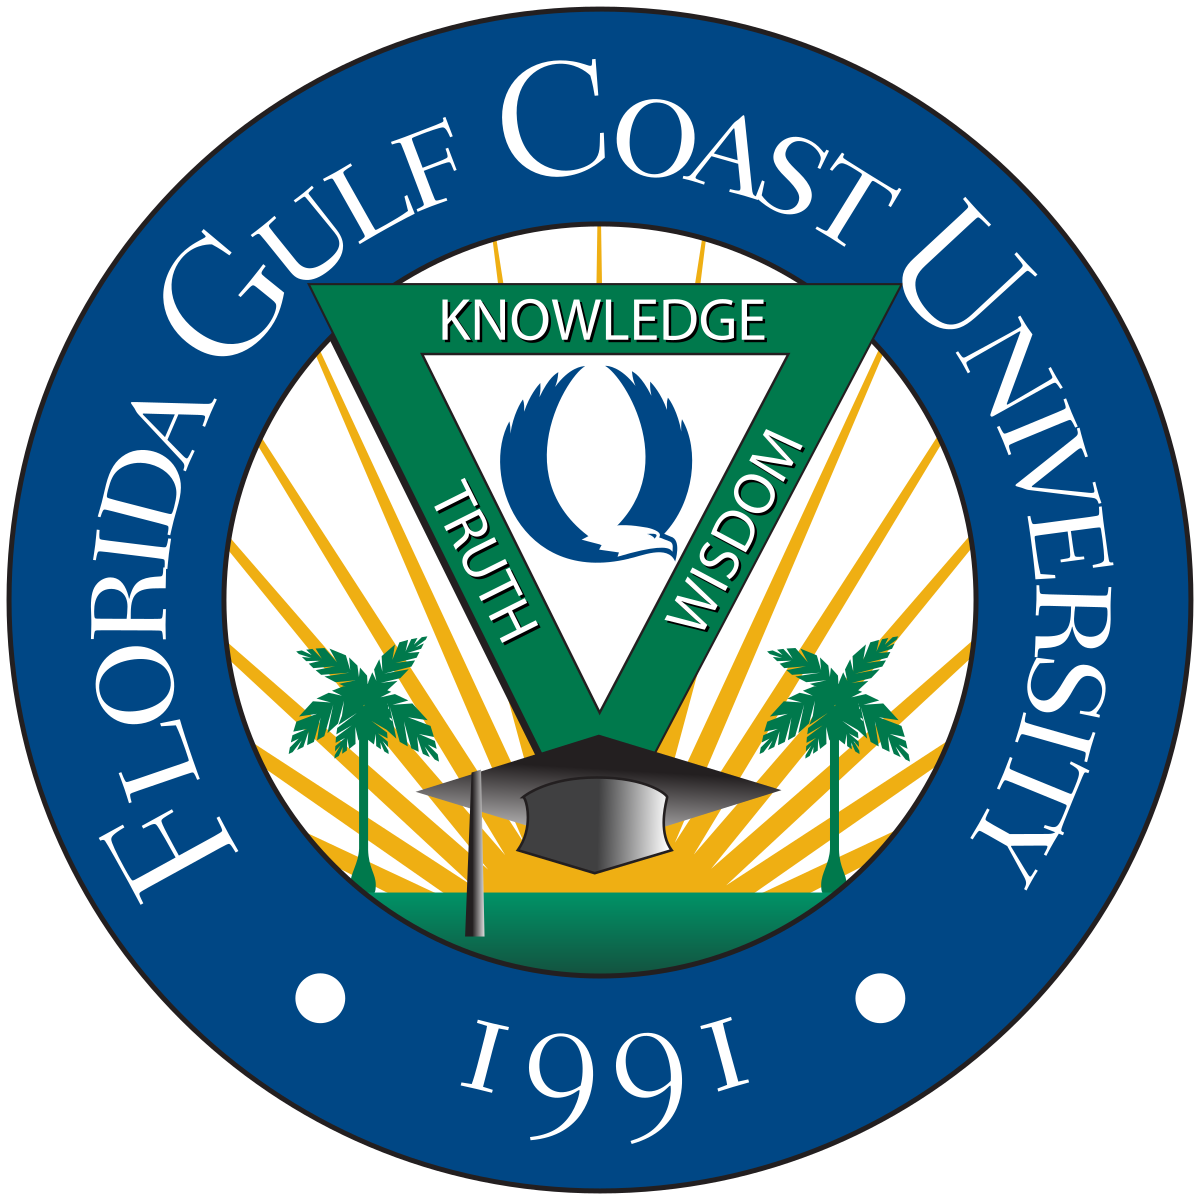 https://upload.wikimedia.org/wikipedia/en/thumb/c/c5/Florida_Gulf_Coast_University_seal.svg/1200px-Florida_Gulf_Coast_University_seal.svg.png